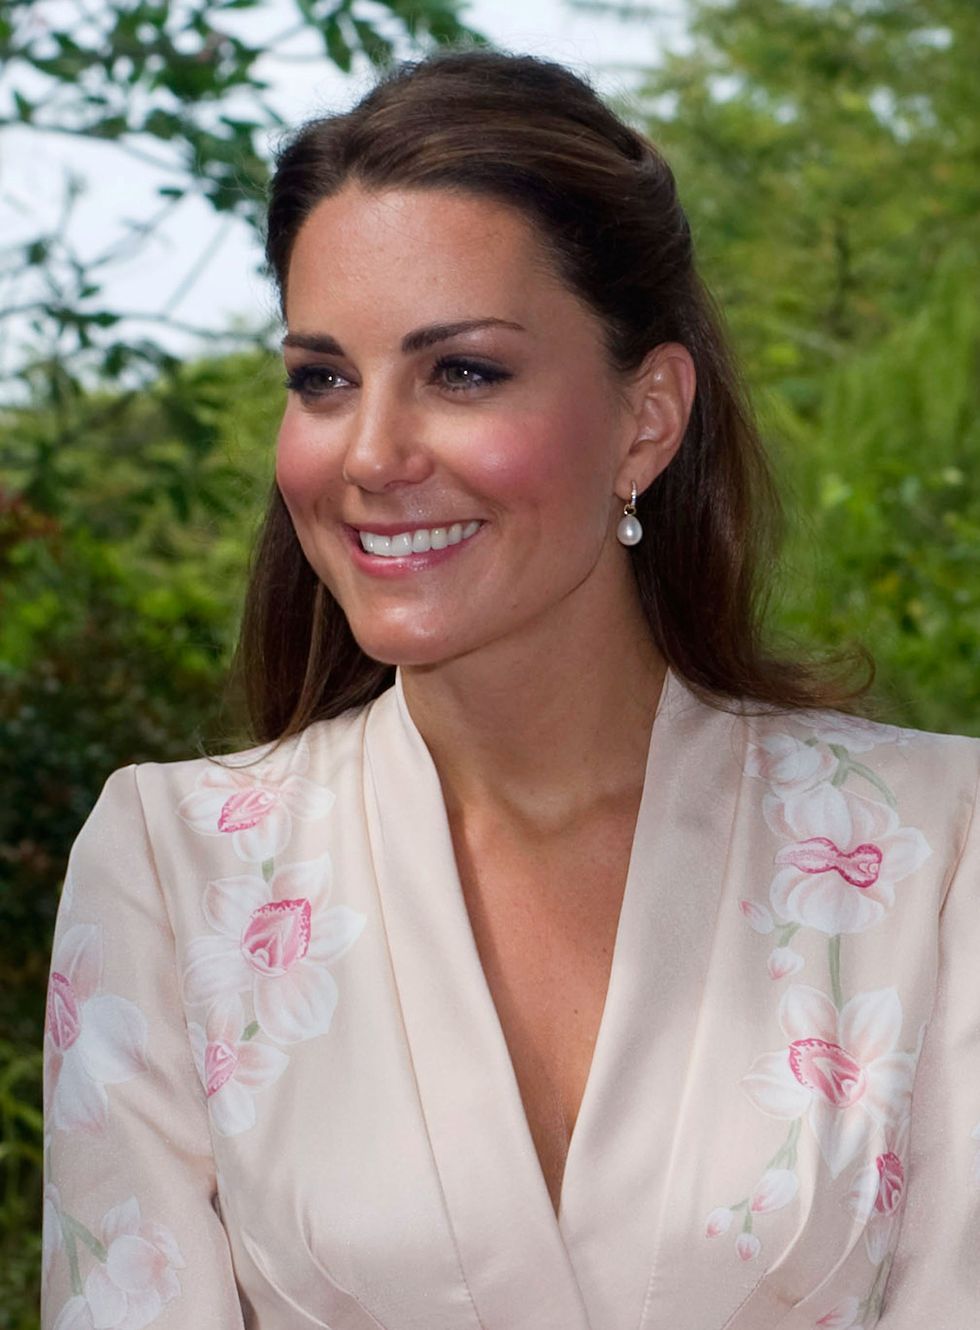 Kate Middleton on royal tour wearing pearl drop earrings